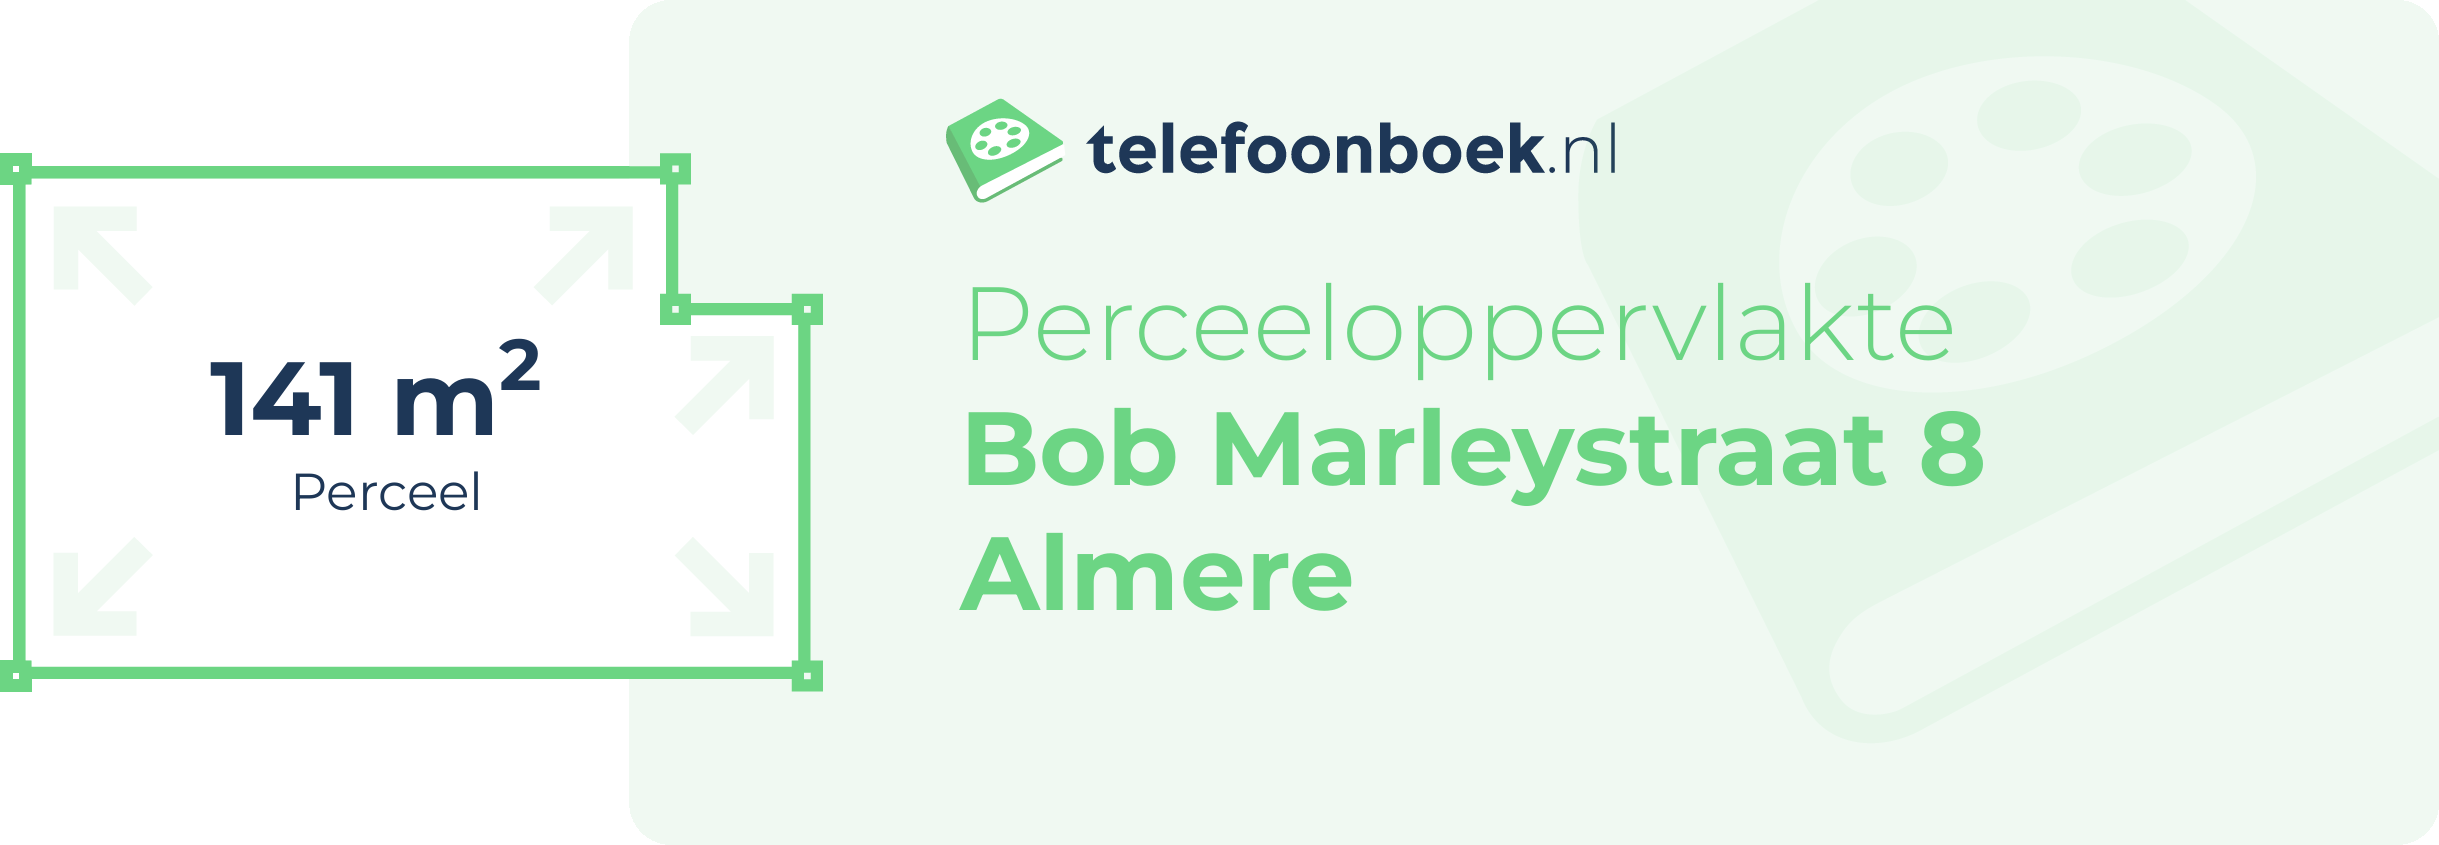 Perceeloppervlakte Bob Marleystraat 8 Almere